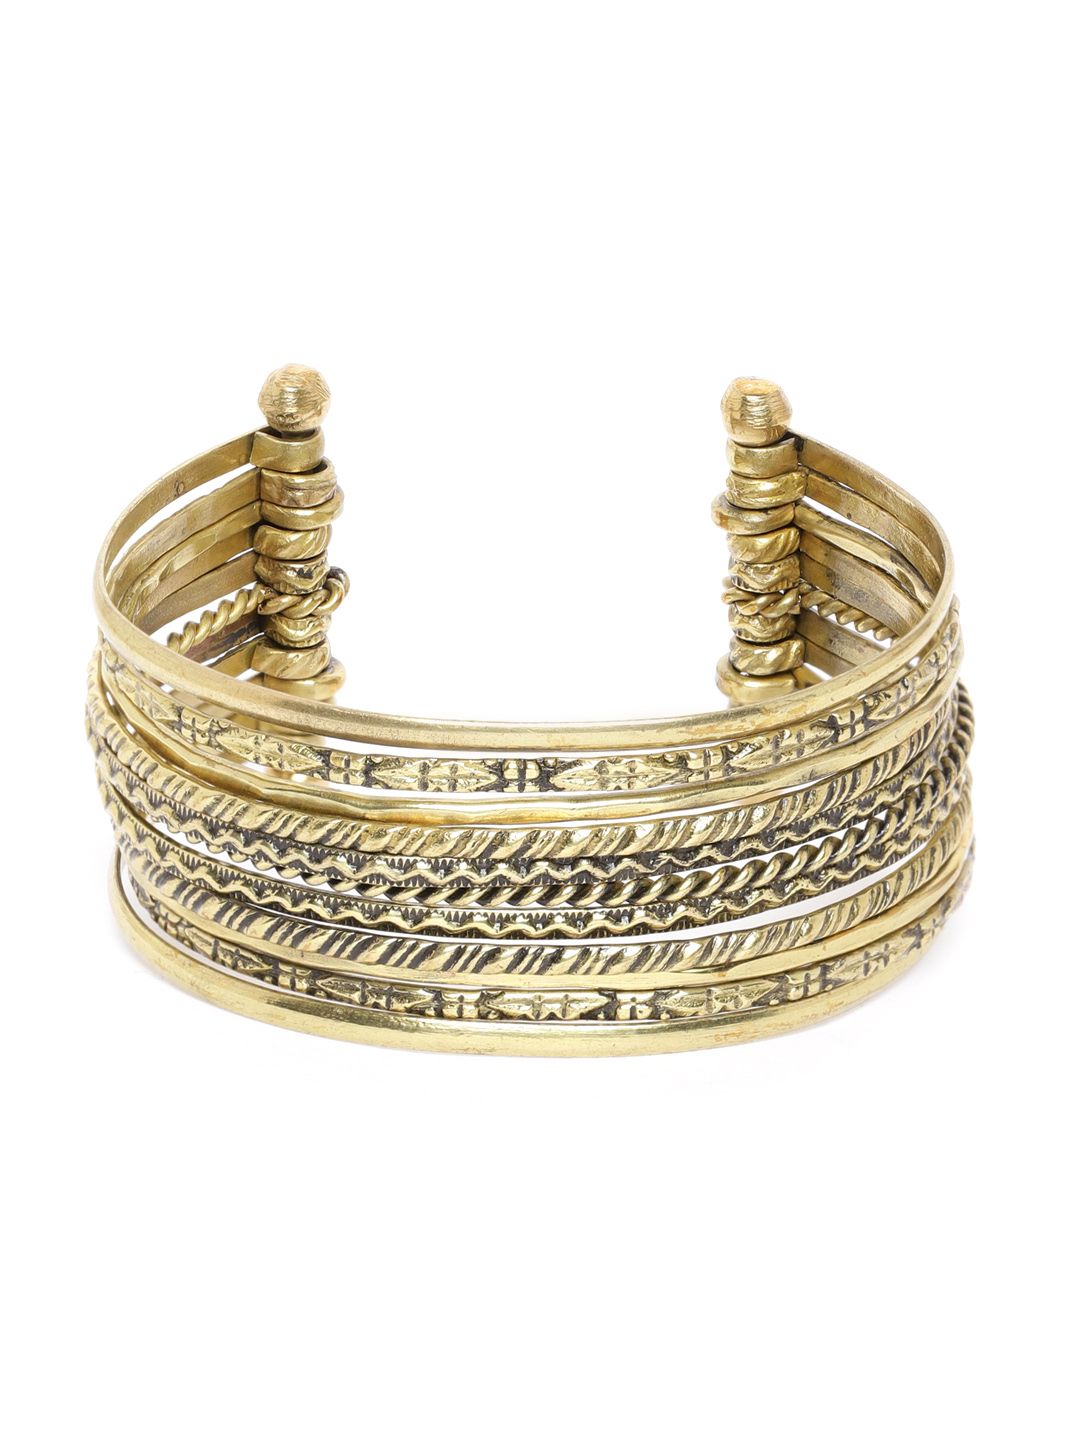 RICHEERA Antique Gold-Plated Textured Cuff Bracelet Price in India